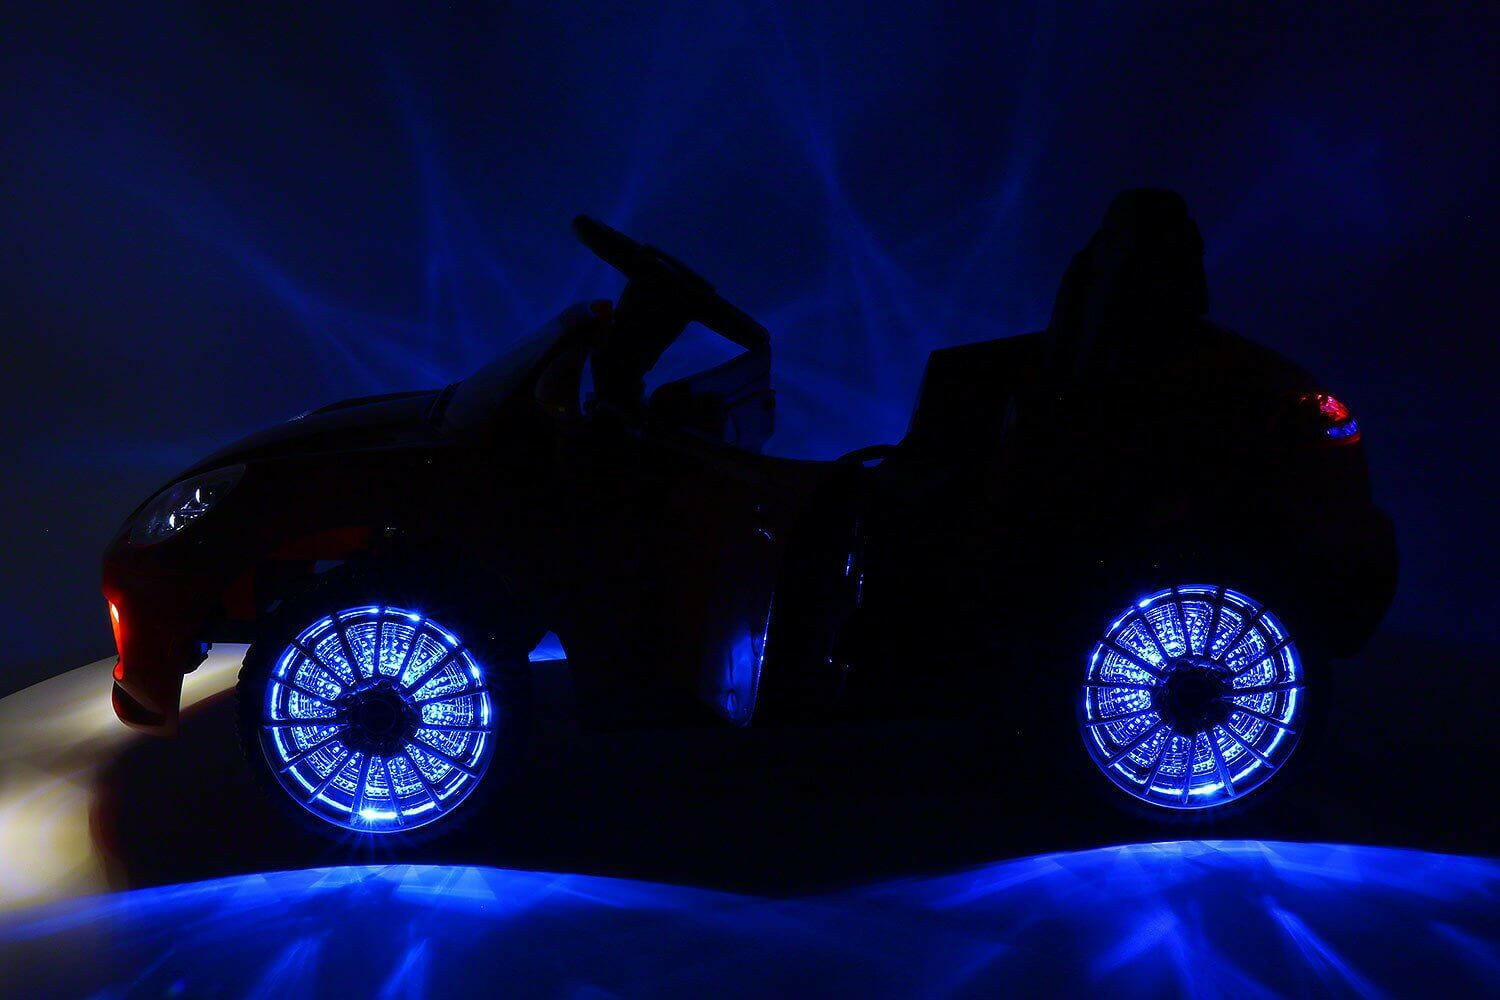 Roadster Electric 12V Ride-On Car w/ Parental Remote, MP3, LED Lights - Kids Eye Candy